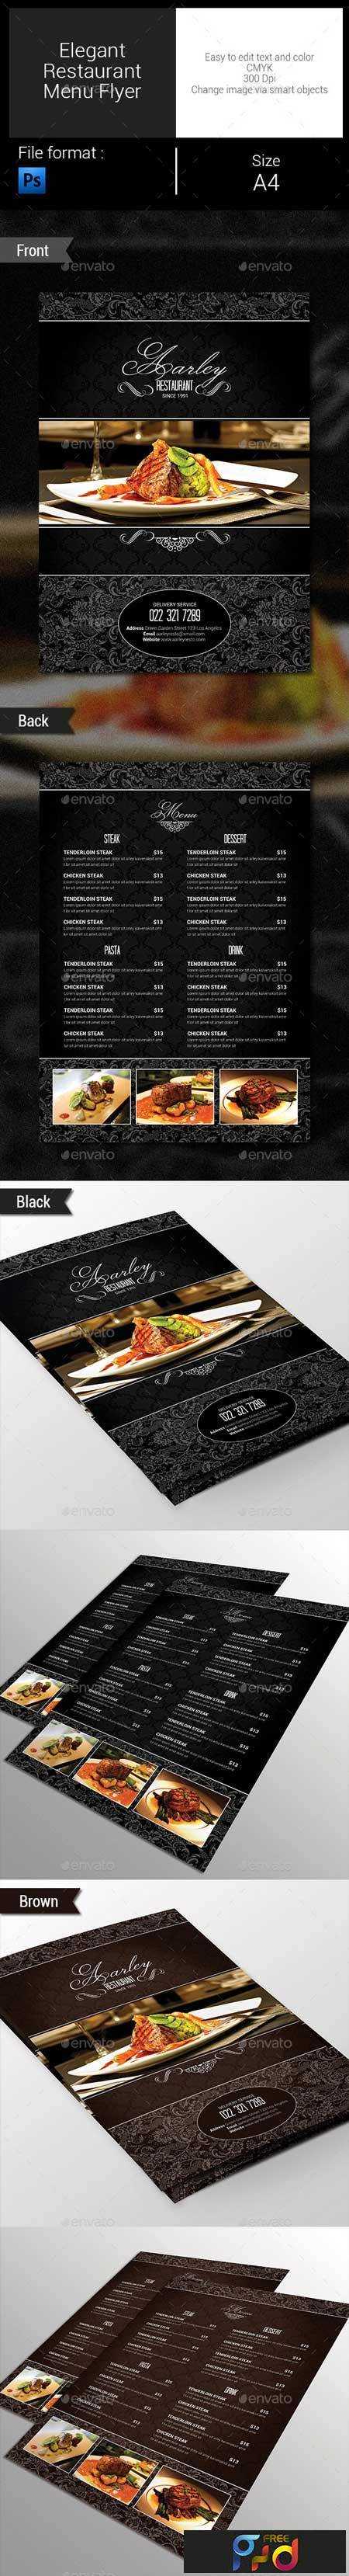 freepsdvn-com_1418958800_elegant_restaurant_menu_flyer_9671212